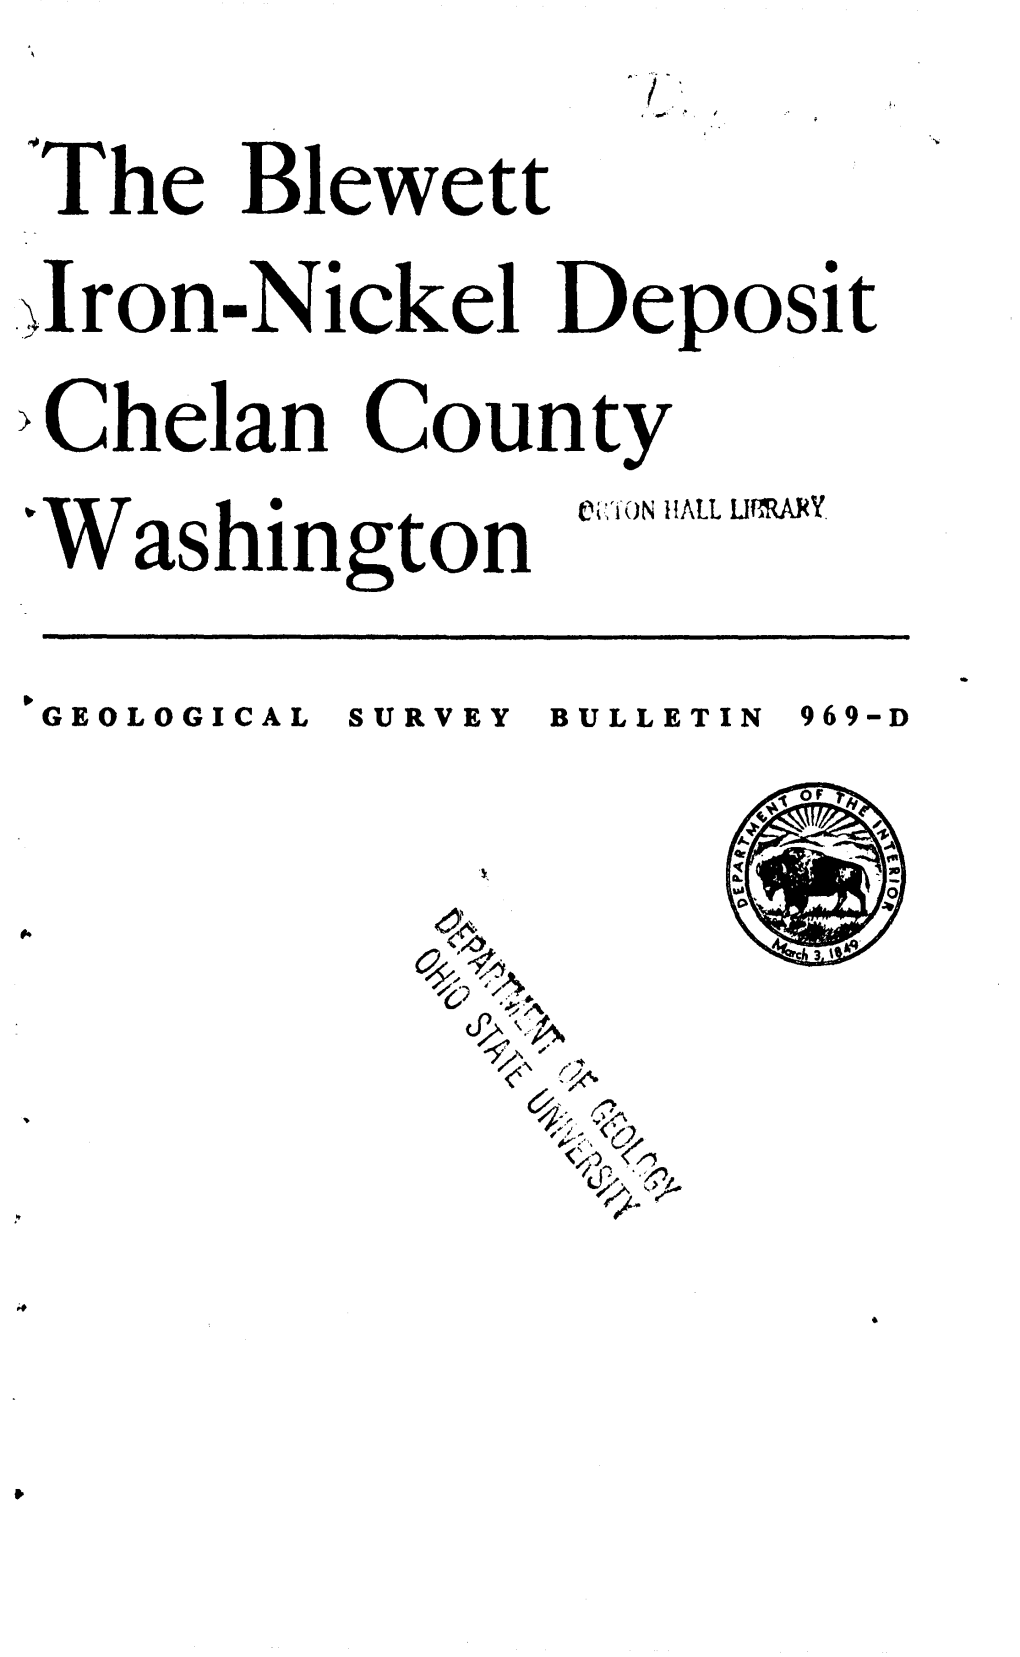 The Blewett &gt;Iron-Nickel Deposit Chelan County 'Washington